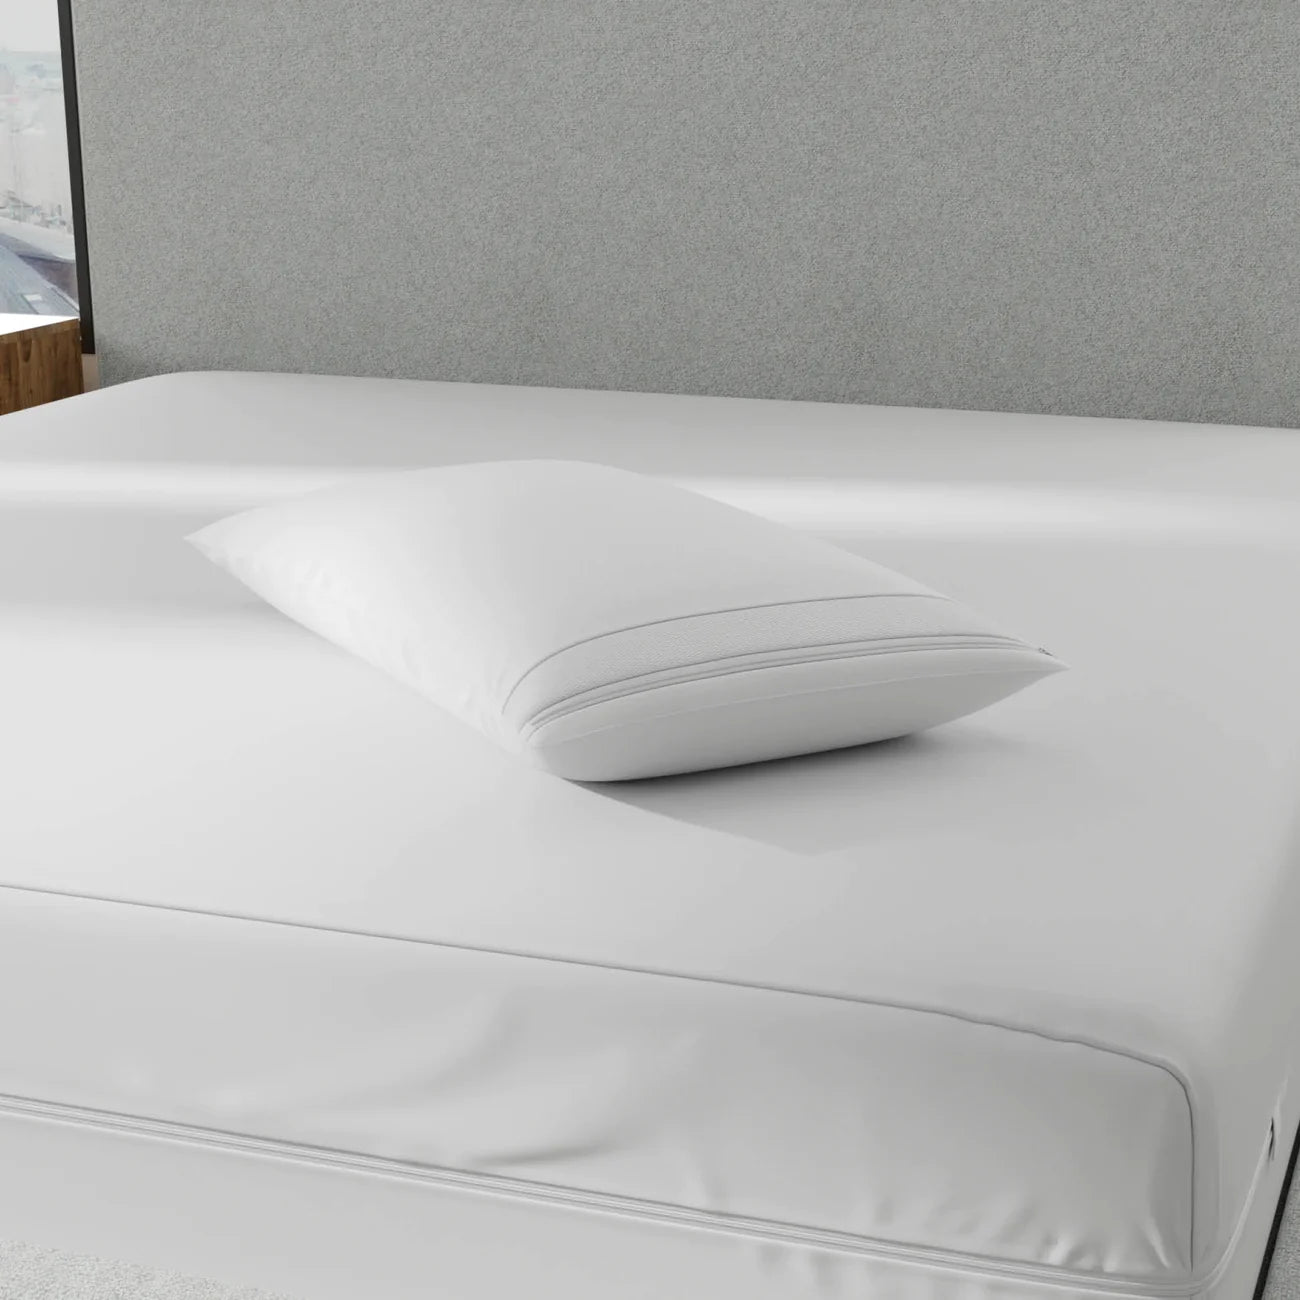 aromatherapy pillow protector image